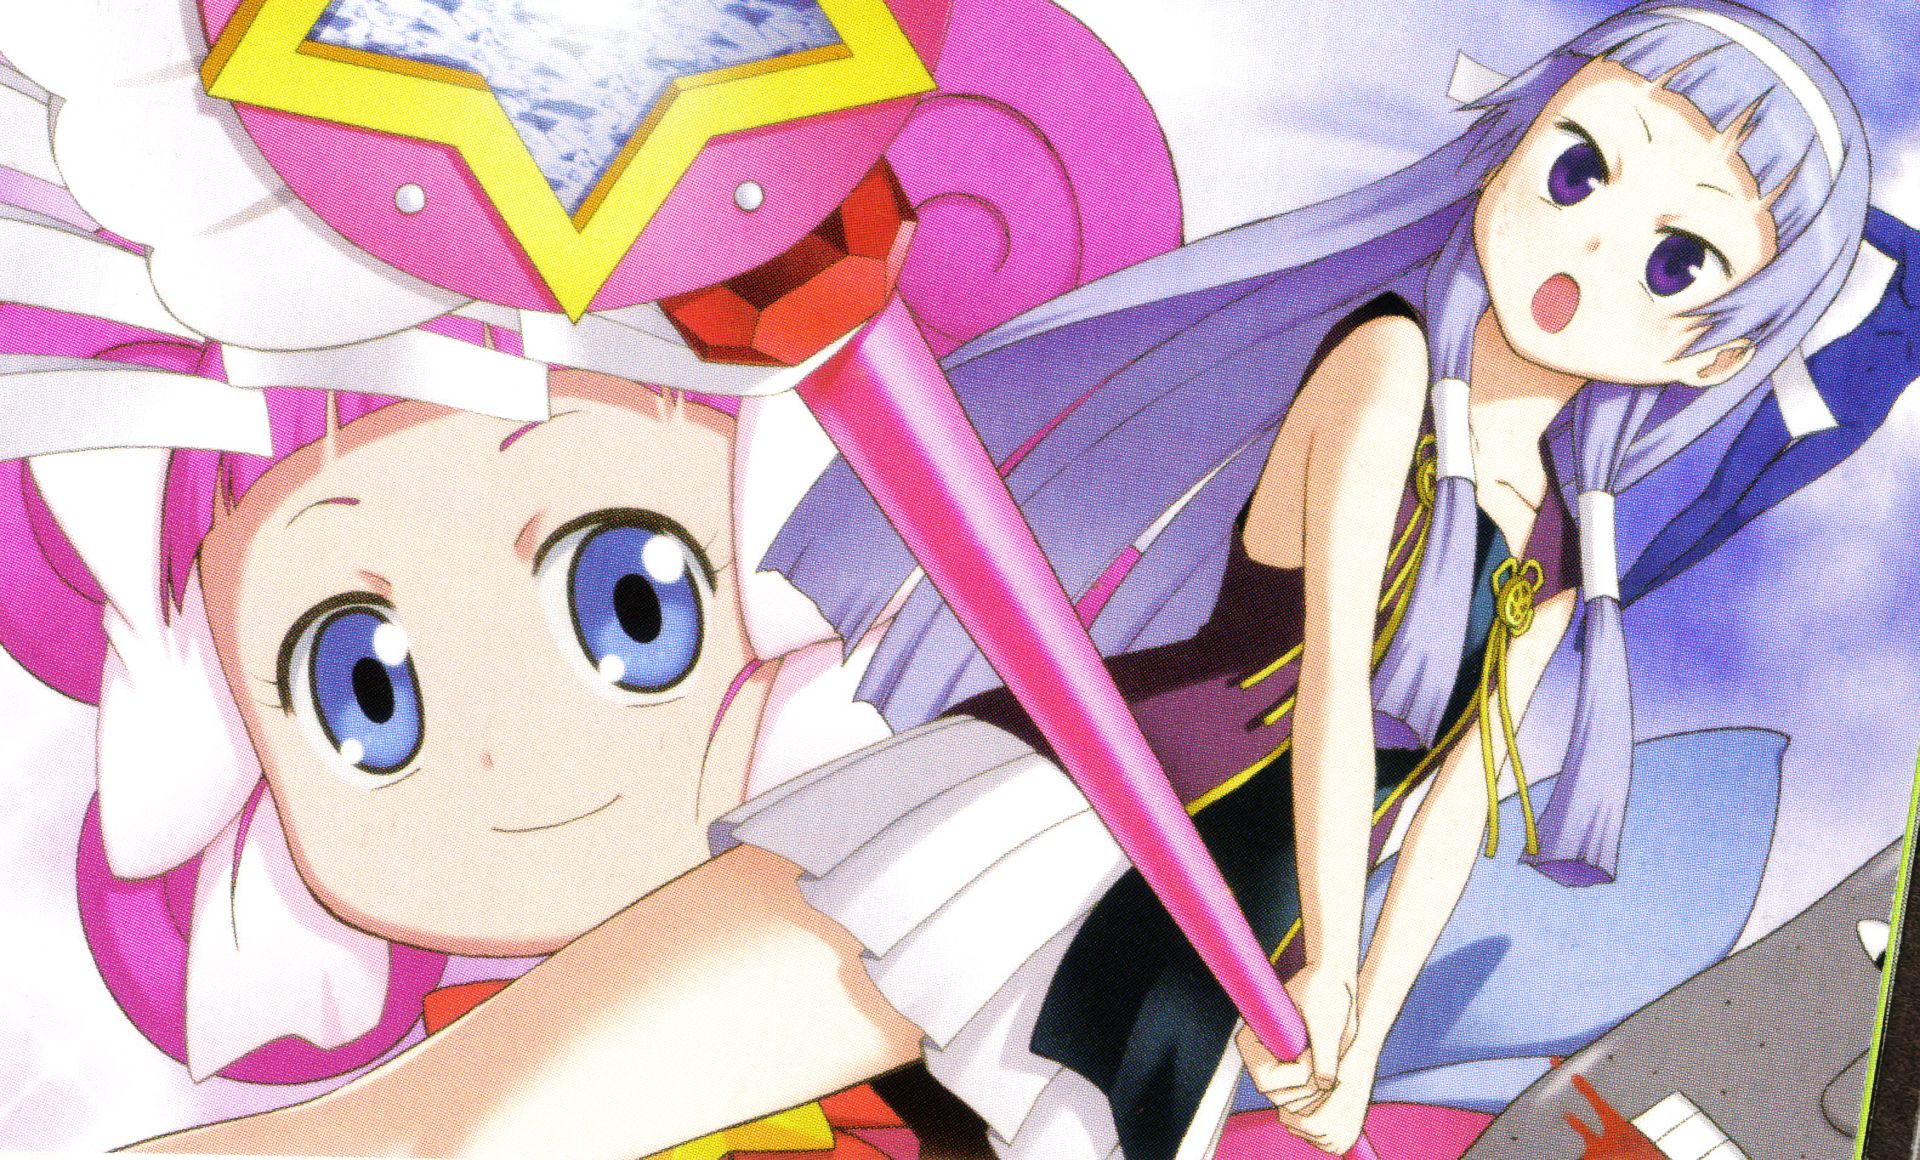 Download mobile wallpaper Anime, Kannagi: Crazy Shrine Maidens for free.